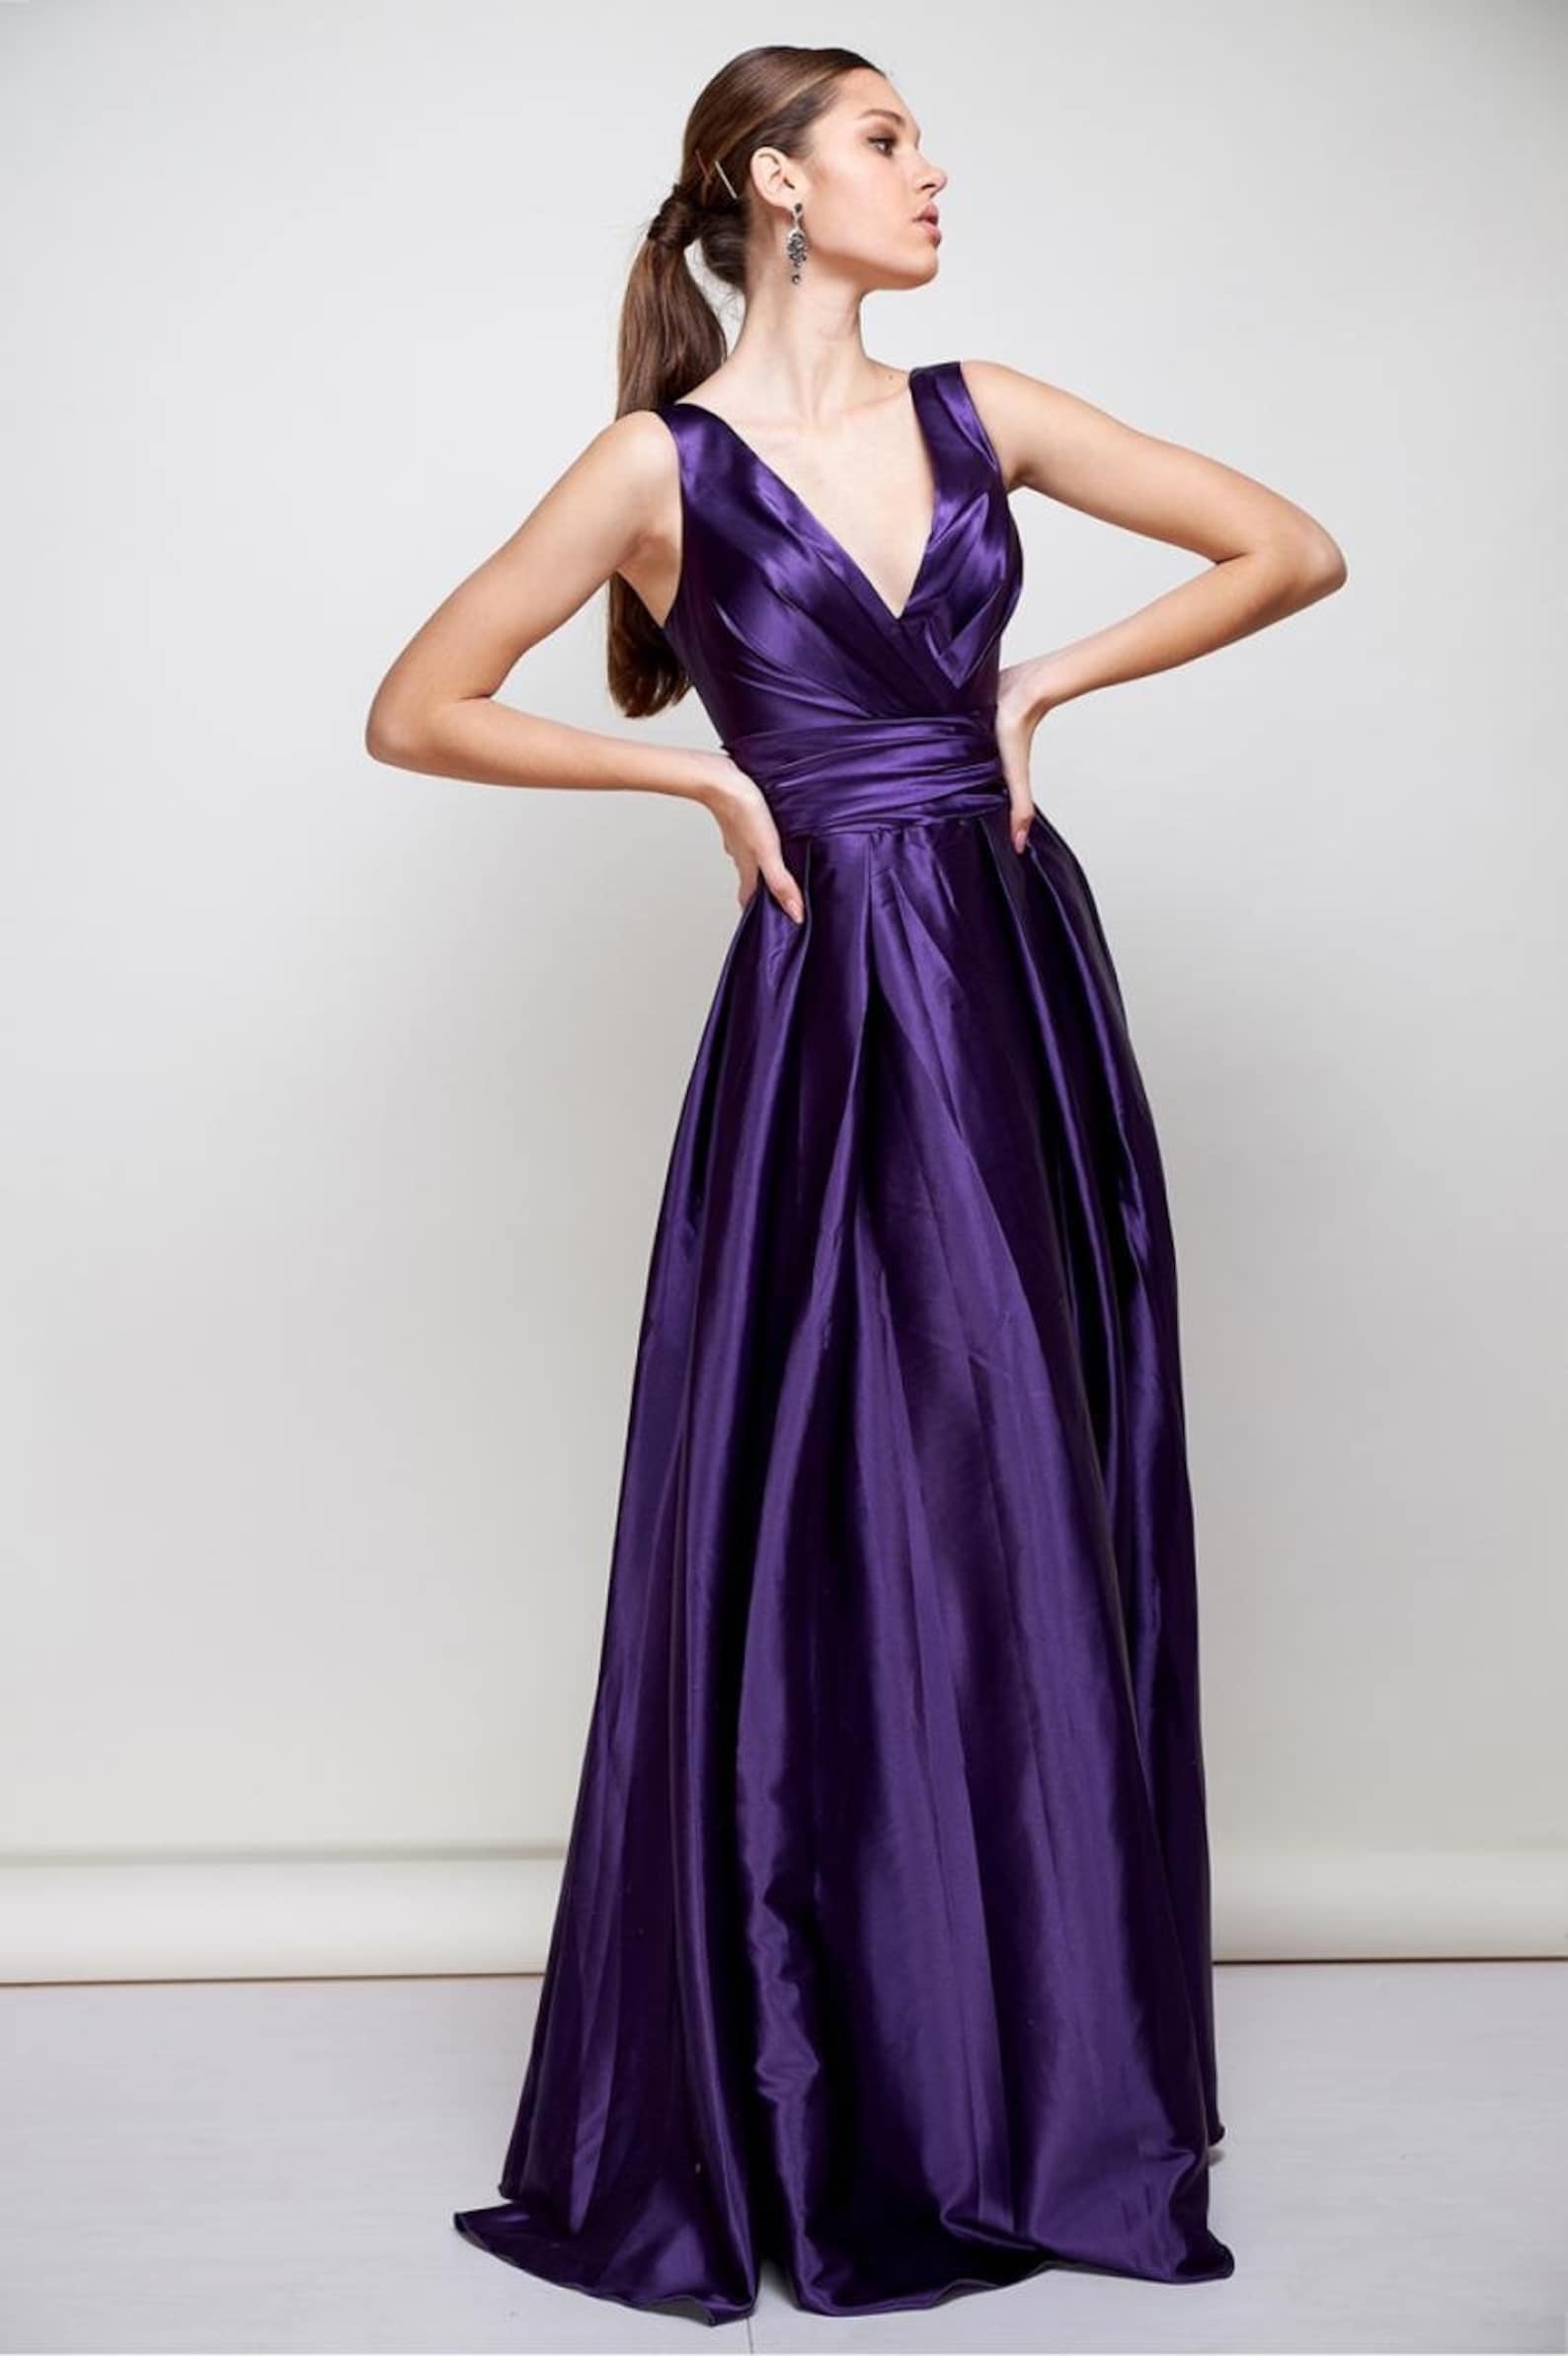 Long Purple Dress Wedding Guest Dress Eggplant Evening Gown - Etsy